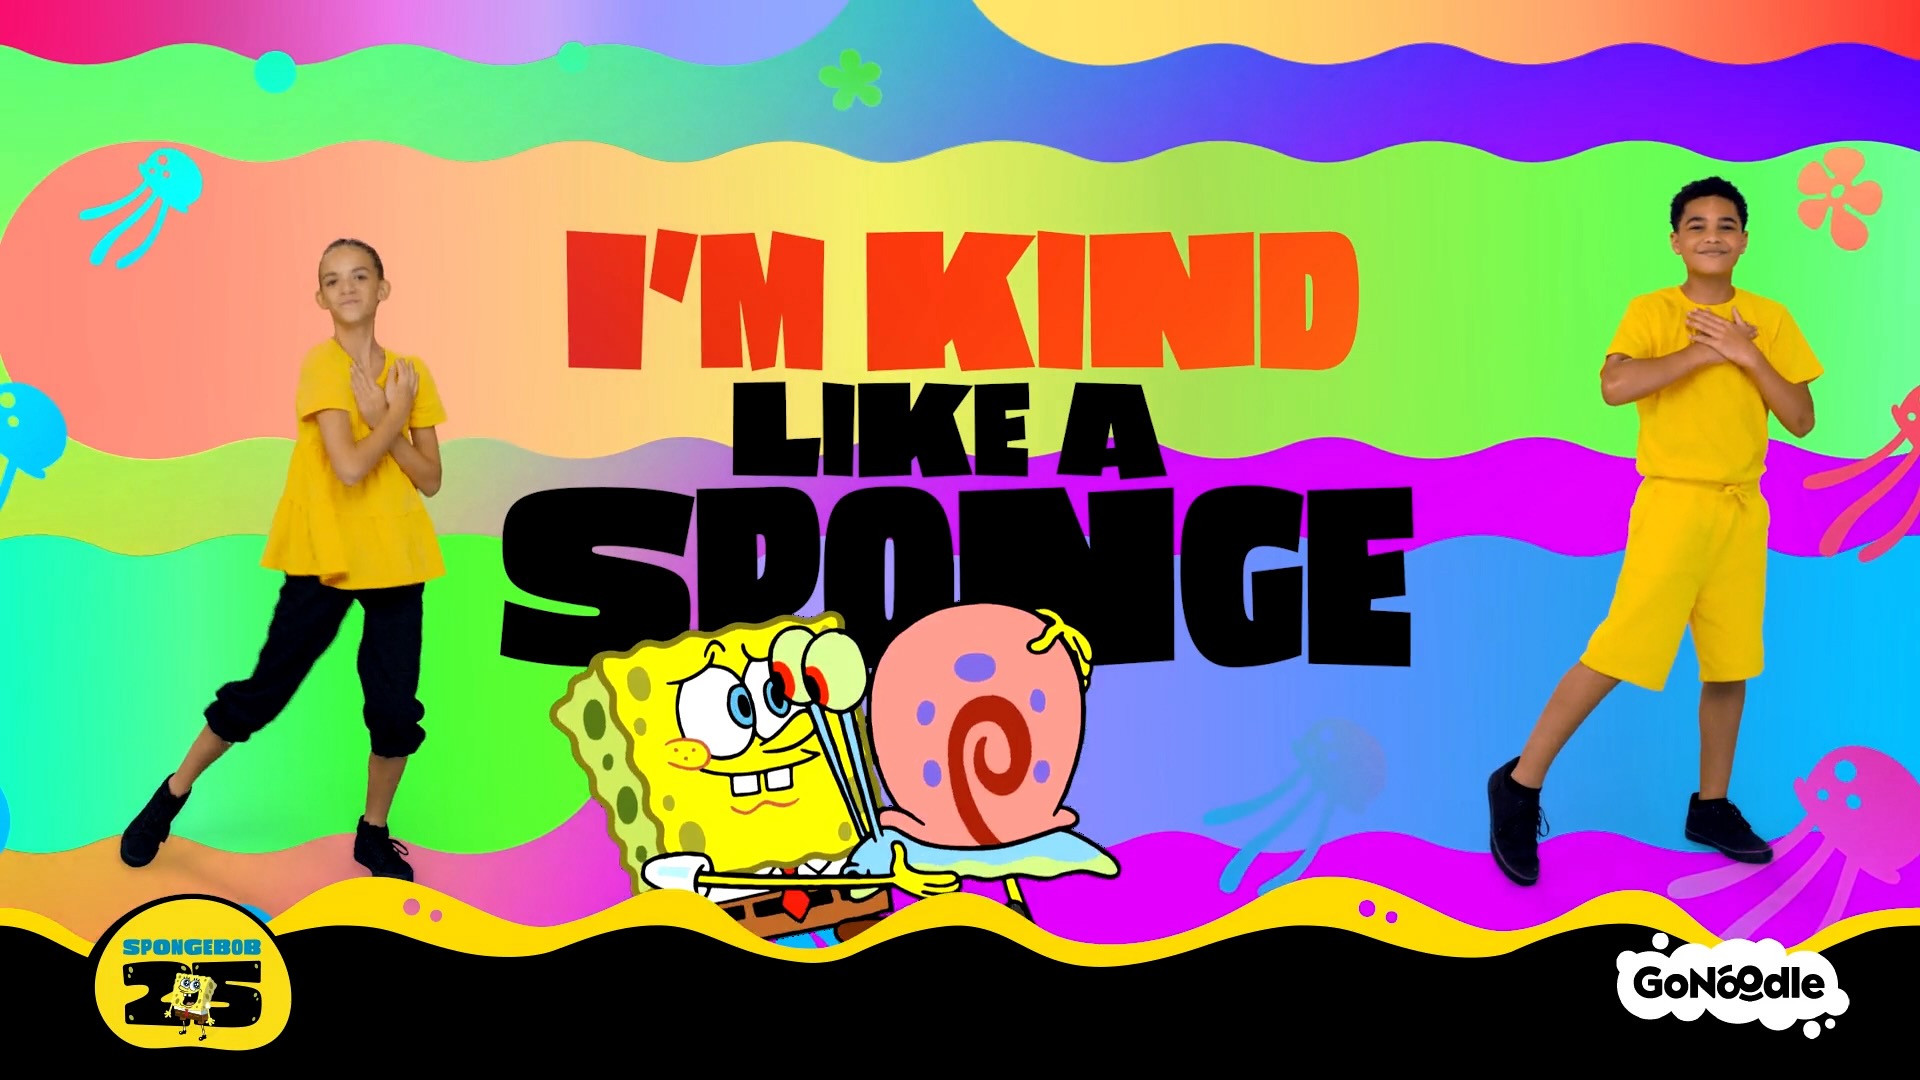 Dance Like A Sponge!